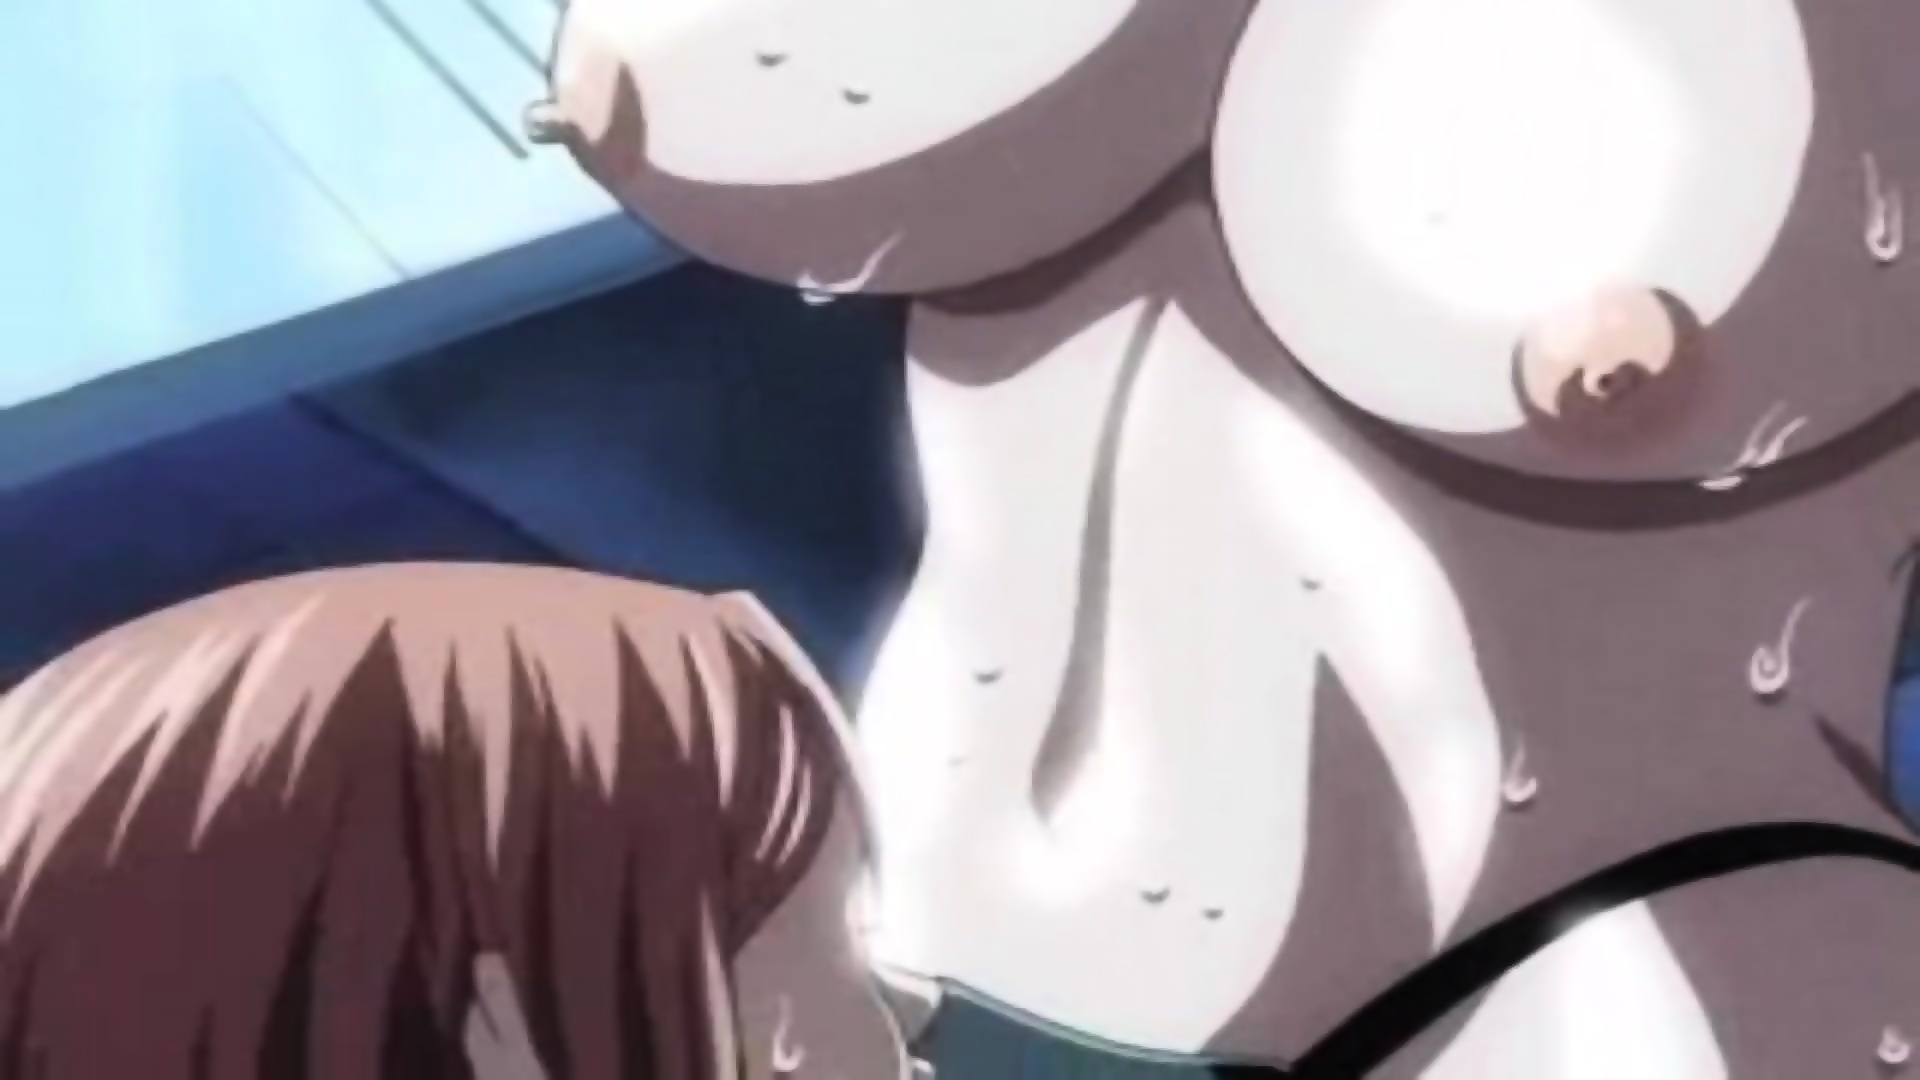 Anime lesbian sex scenes